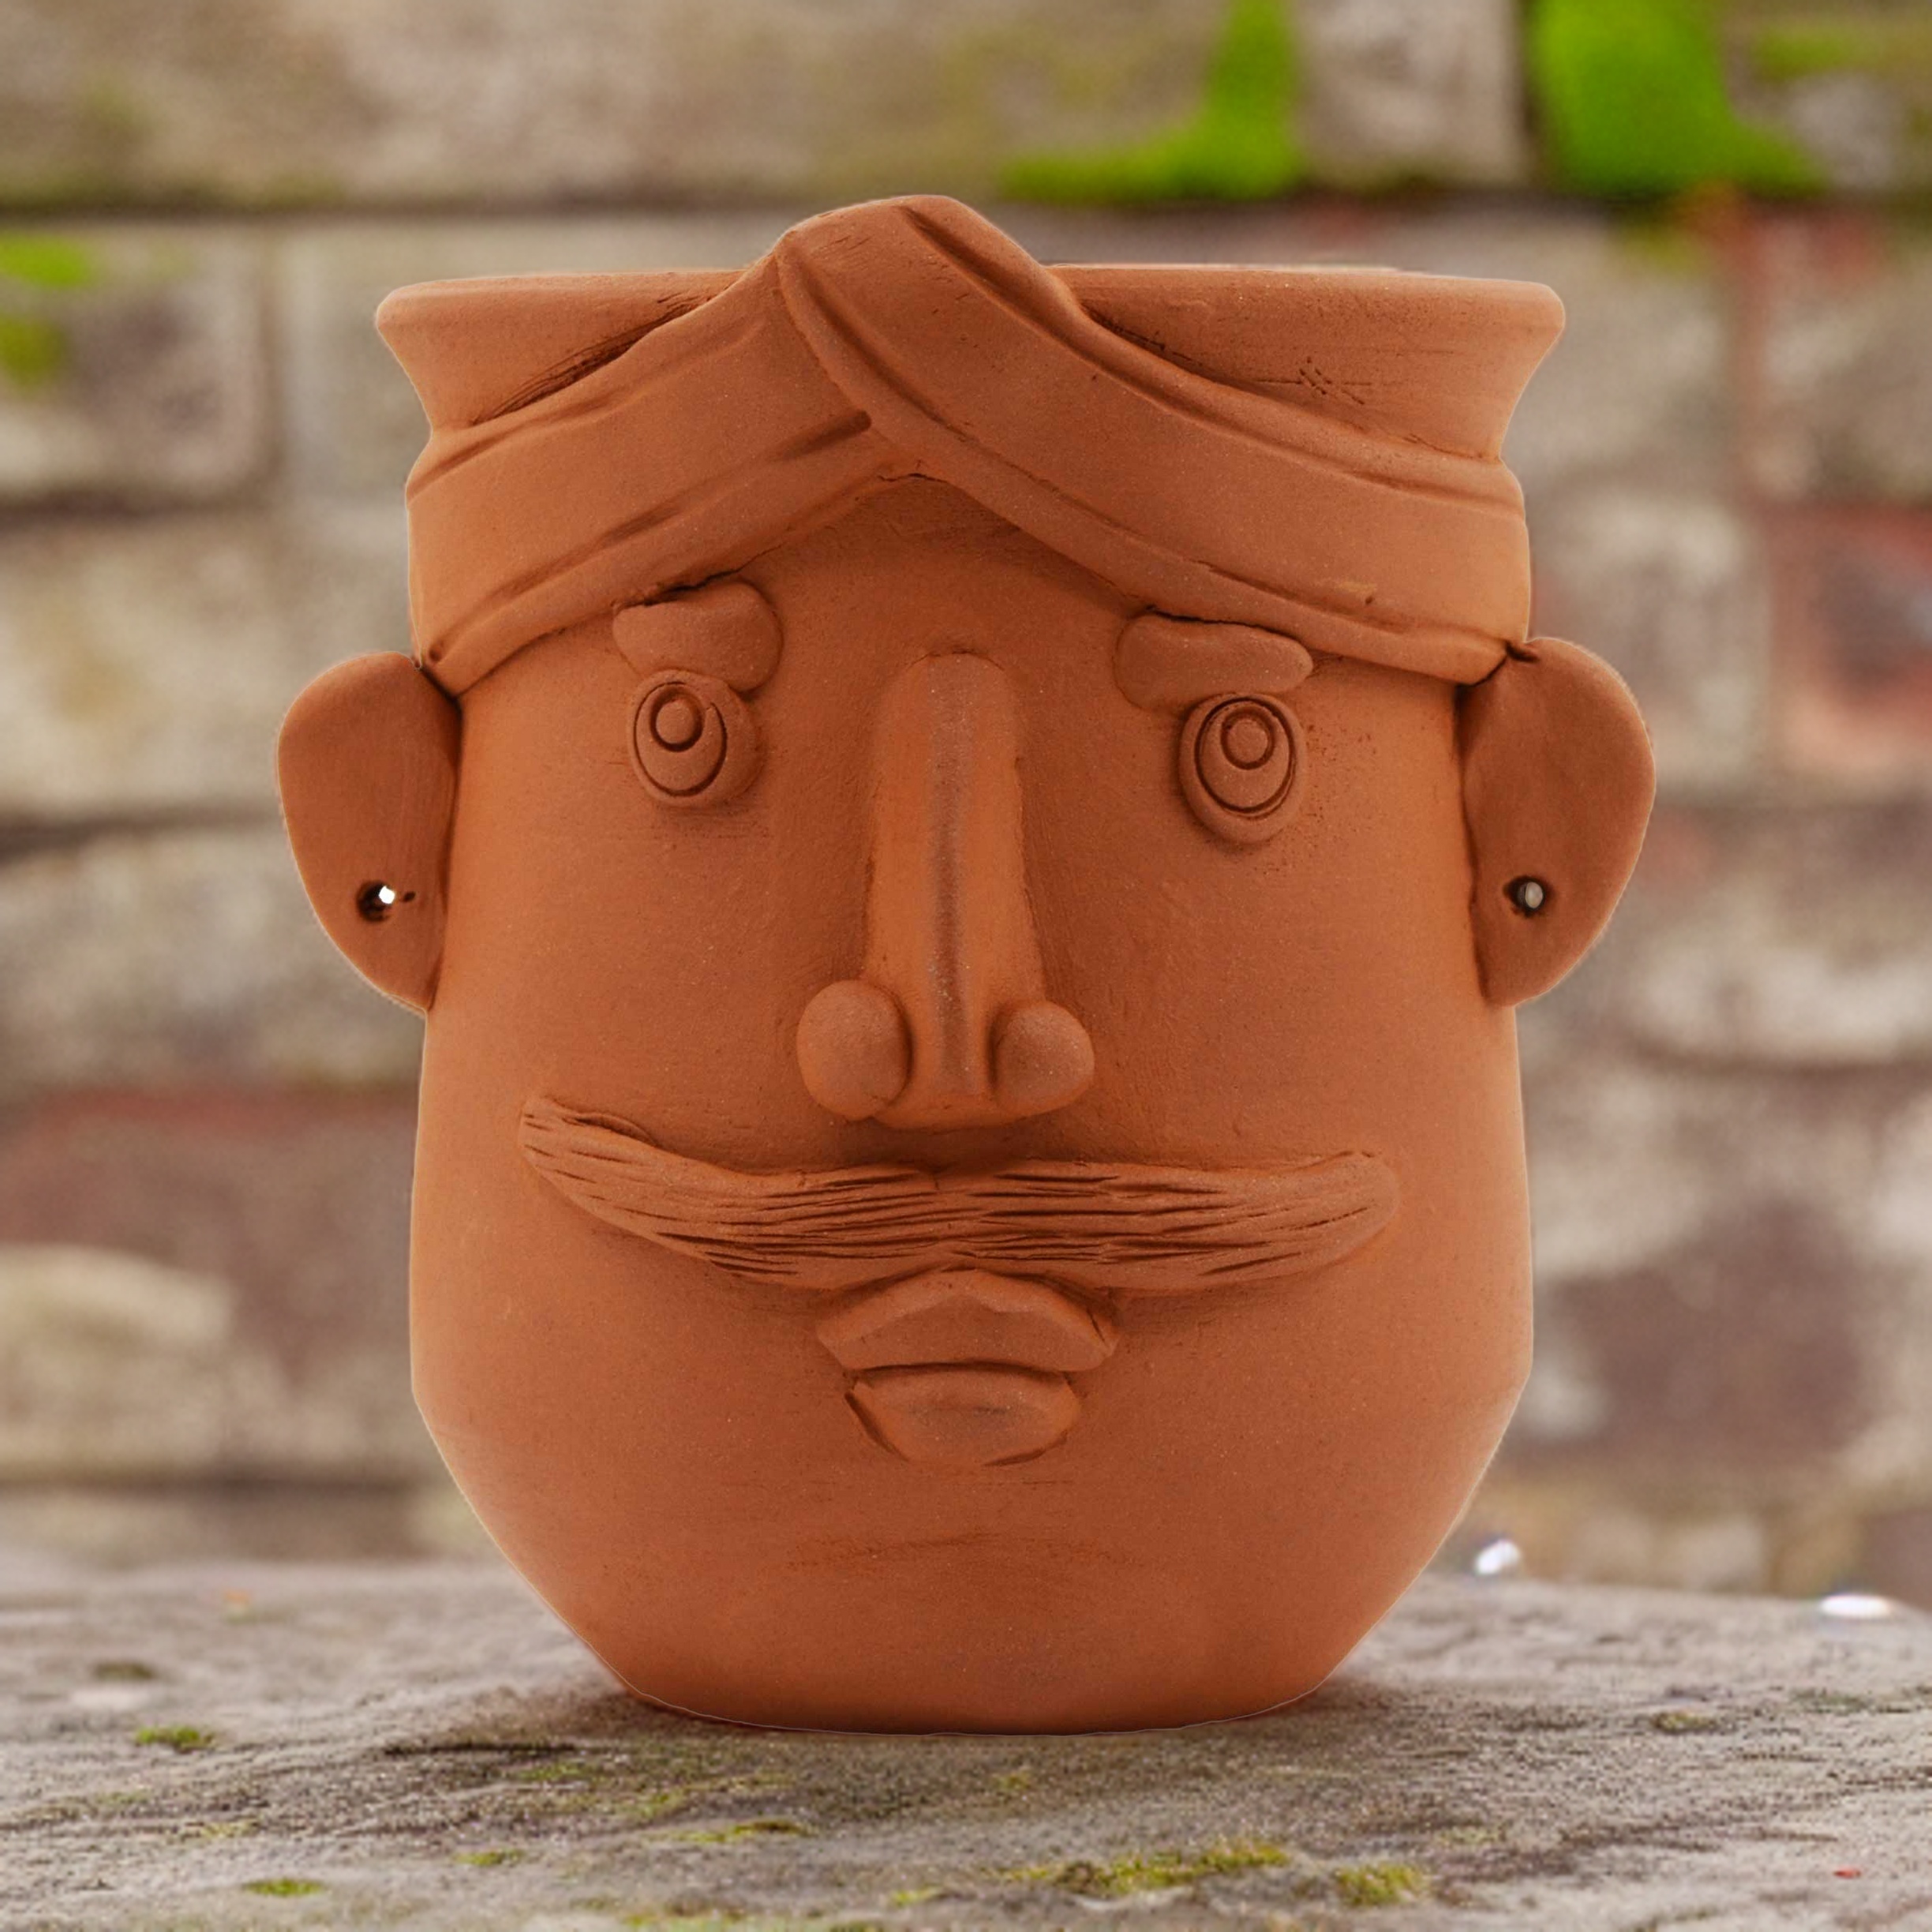 Handmade Plant Pot For Gifting